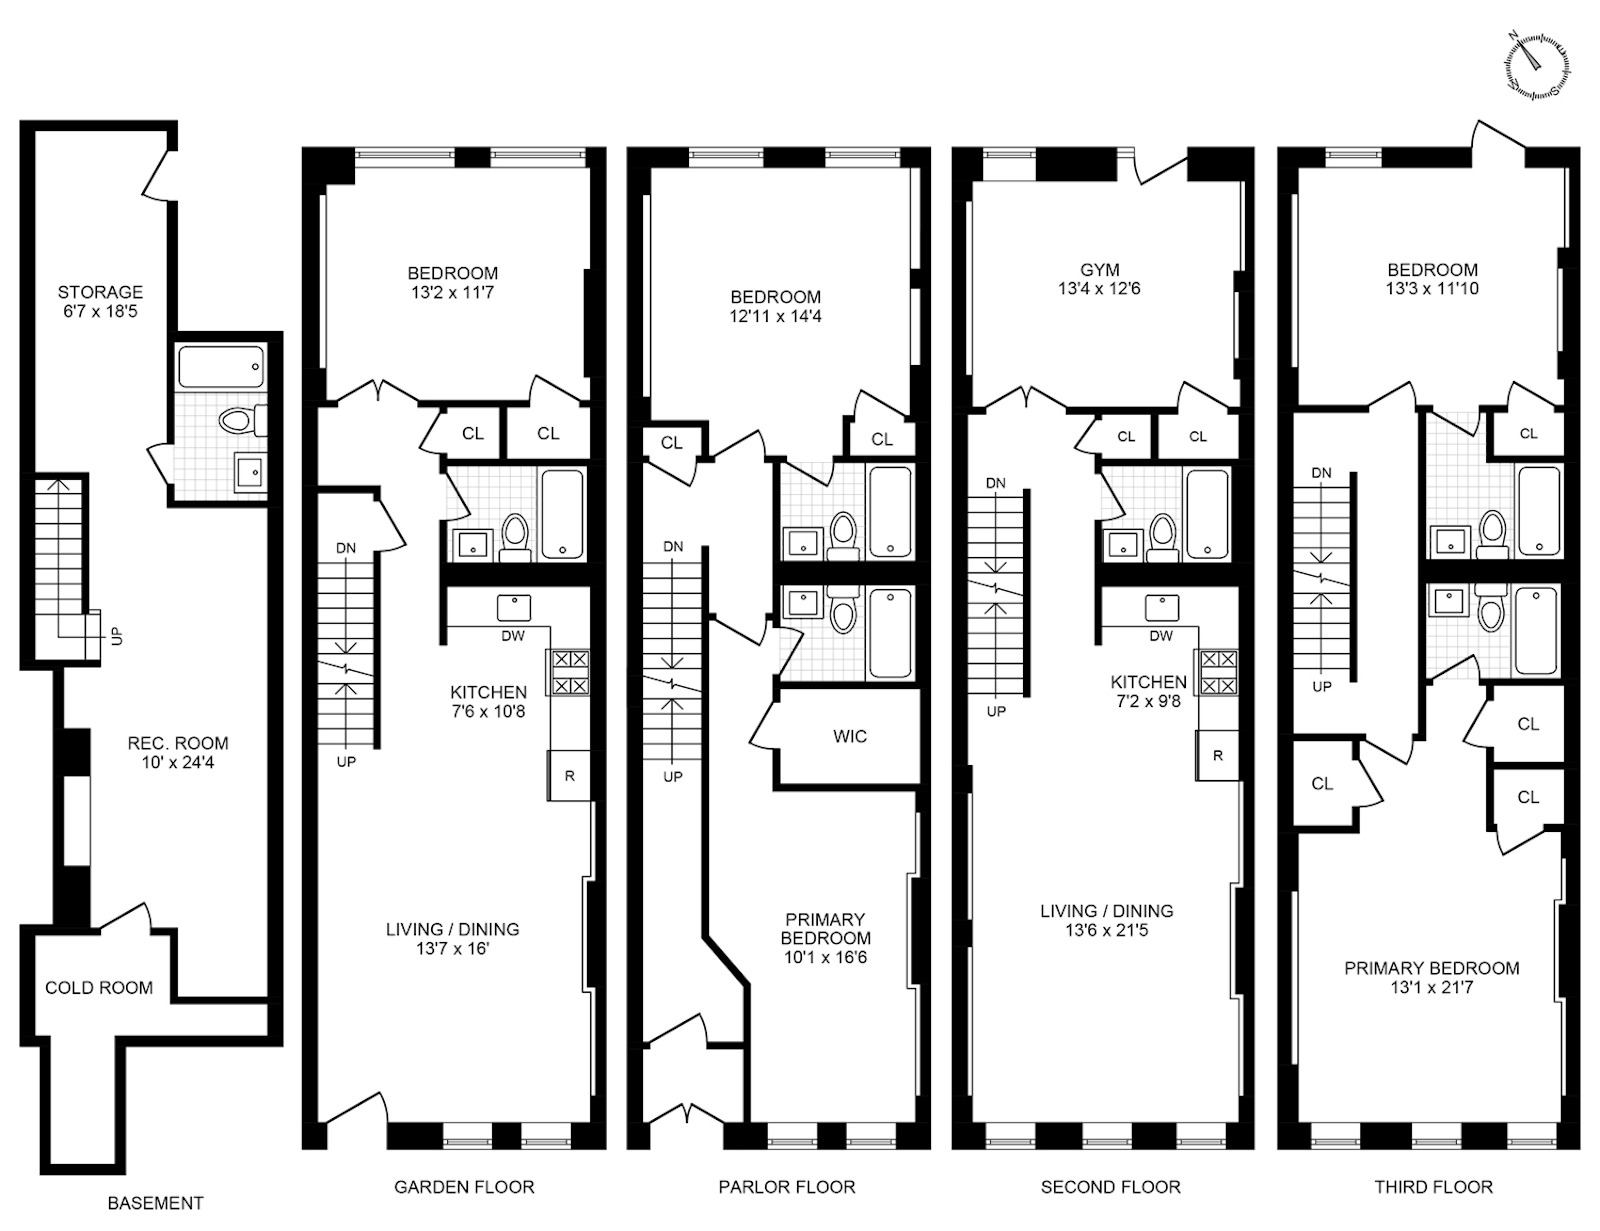 Floorplan for 319 West 137th Street